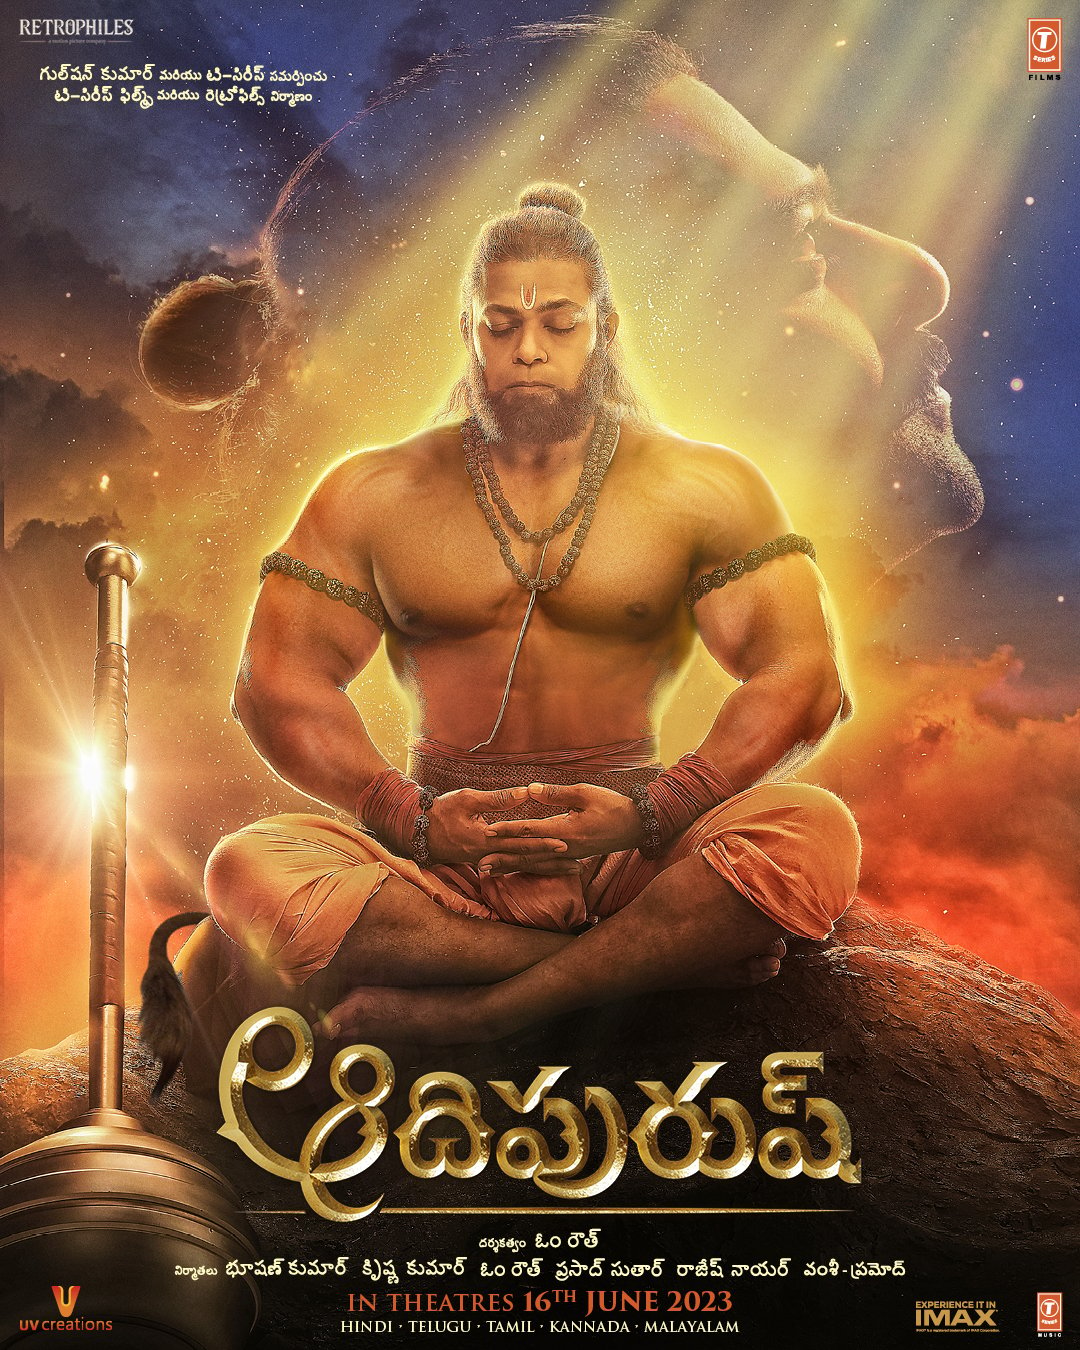 Poster Talk Lord Hanuman from Adipurush